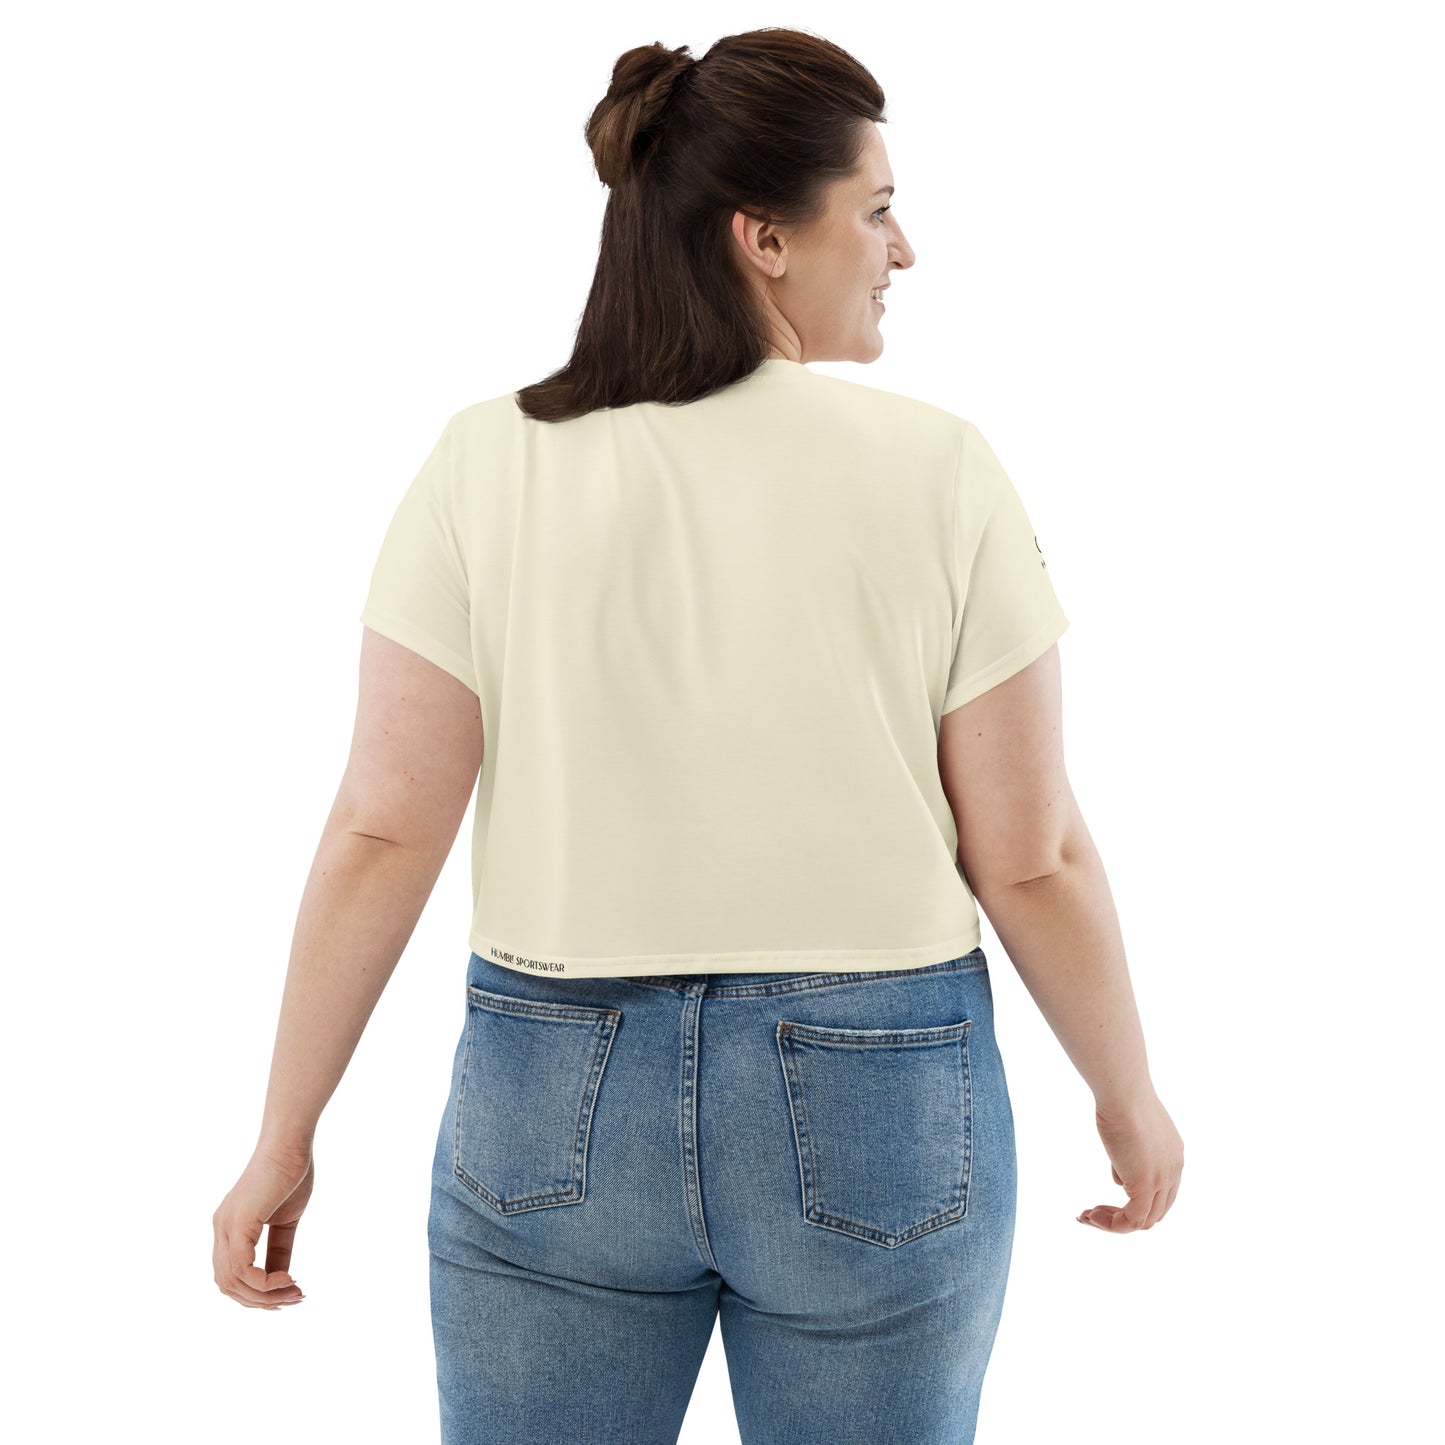 Humble Sportswear, women’s color match neutral casual wear crop top t-shirt